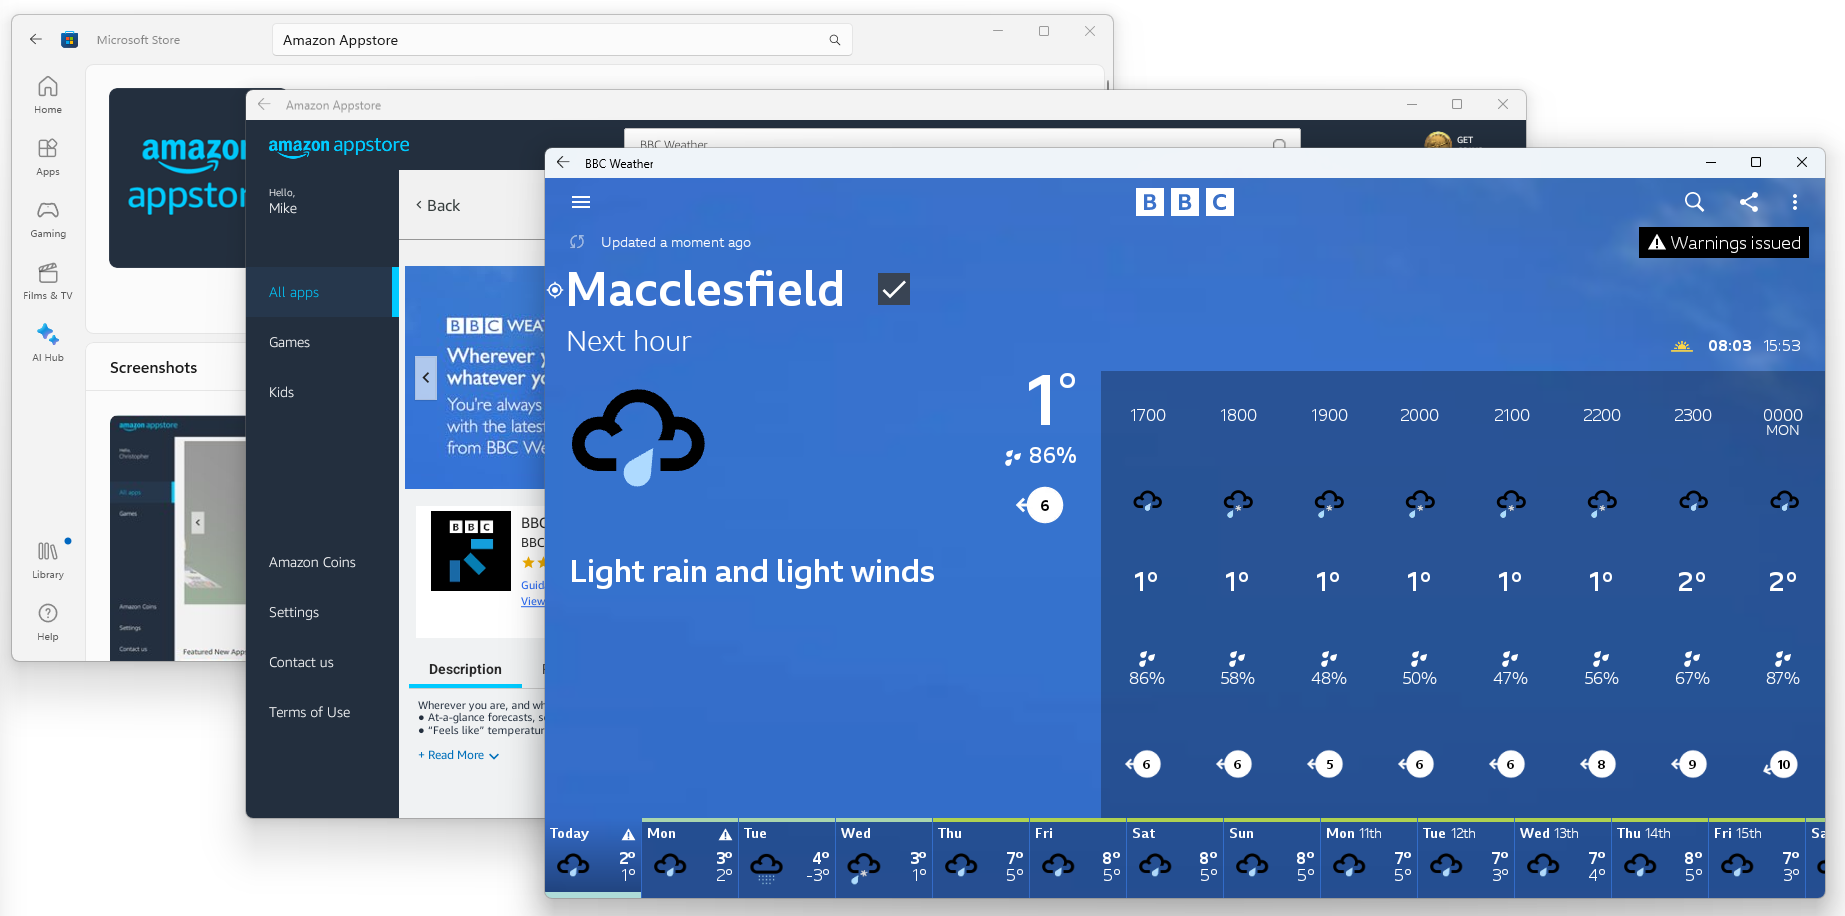 Microsoft Store, Amazon Appstore, BBC Weather